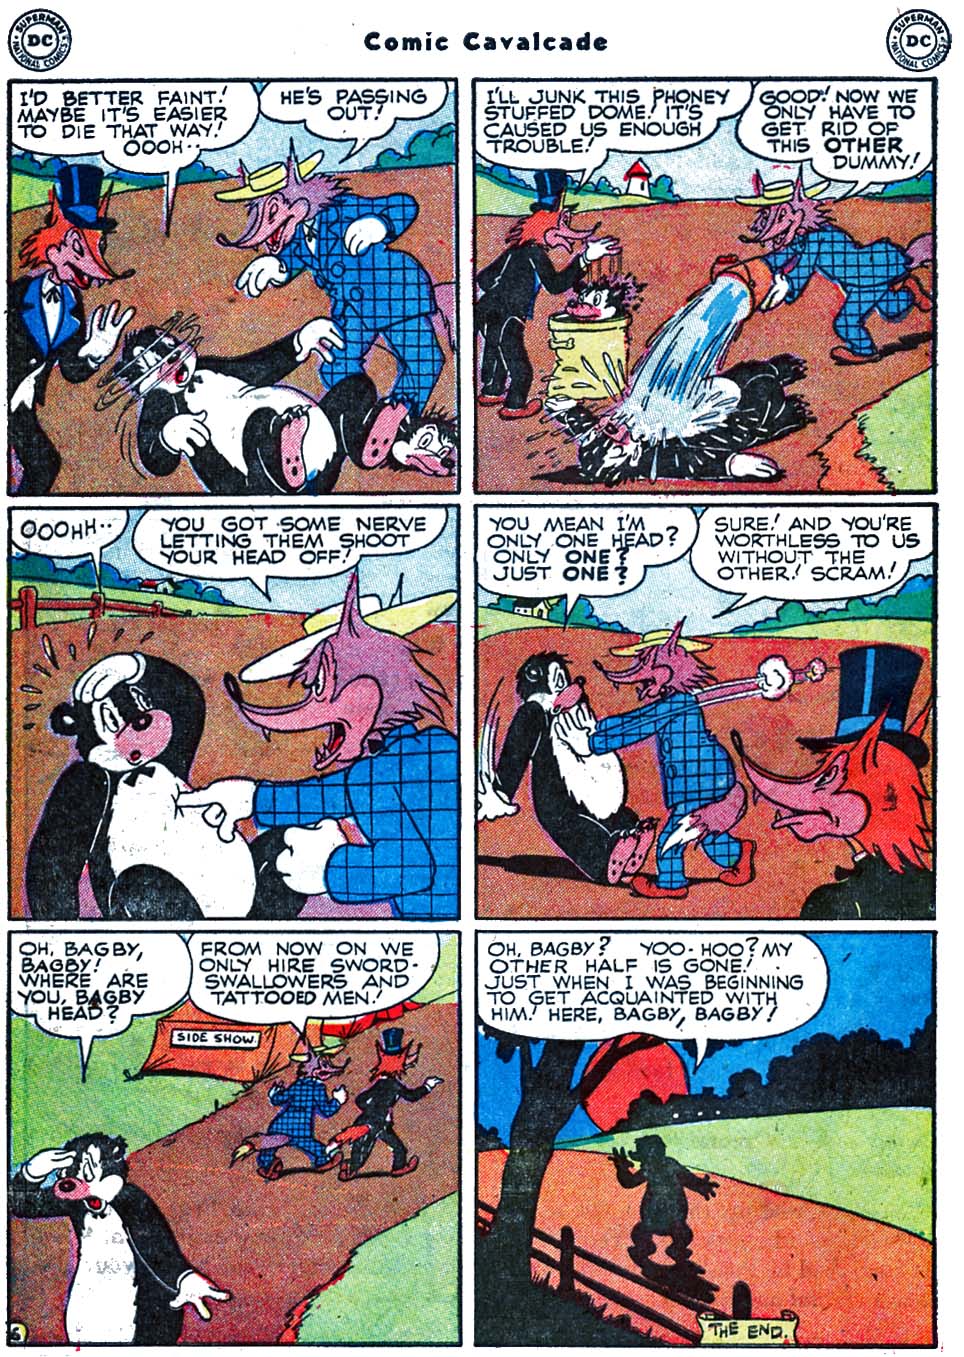 Comic Cavalcade issue 47 - Page 60